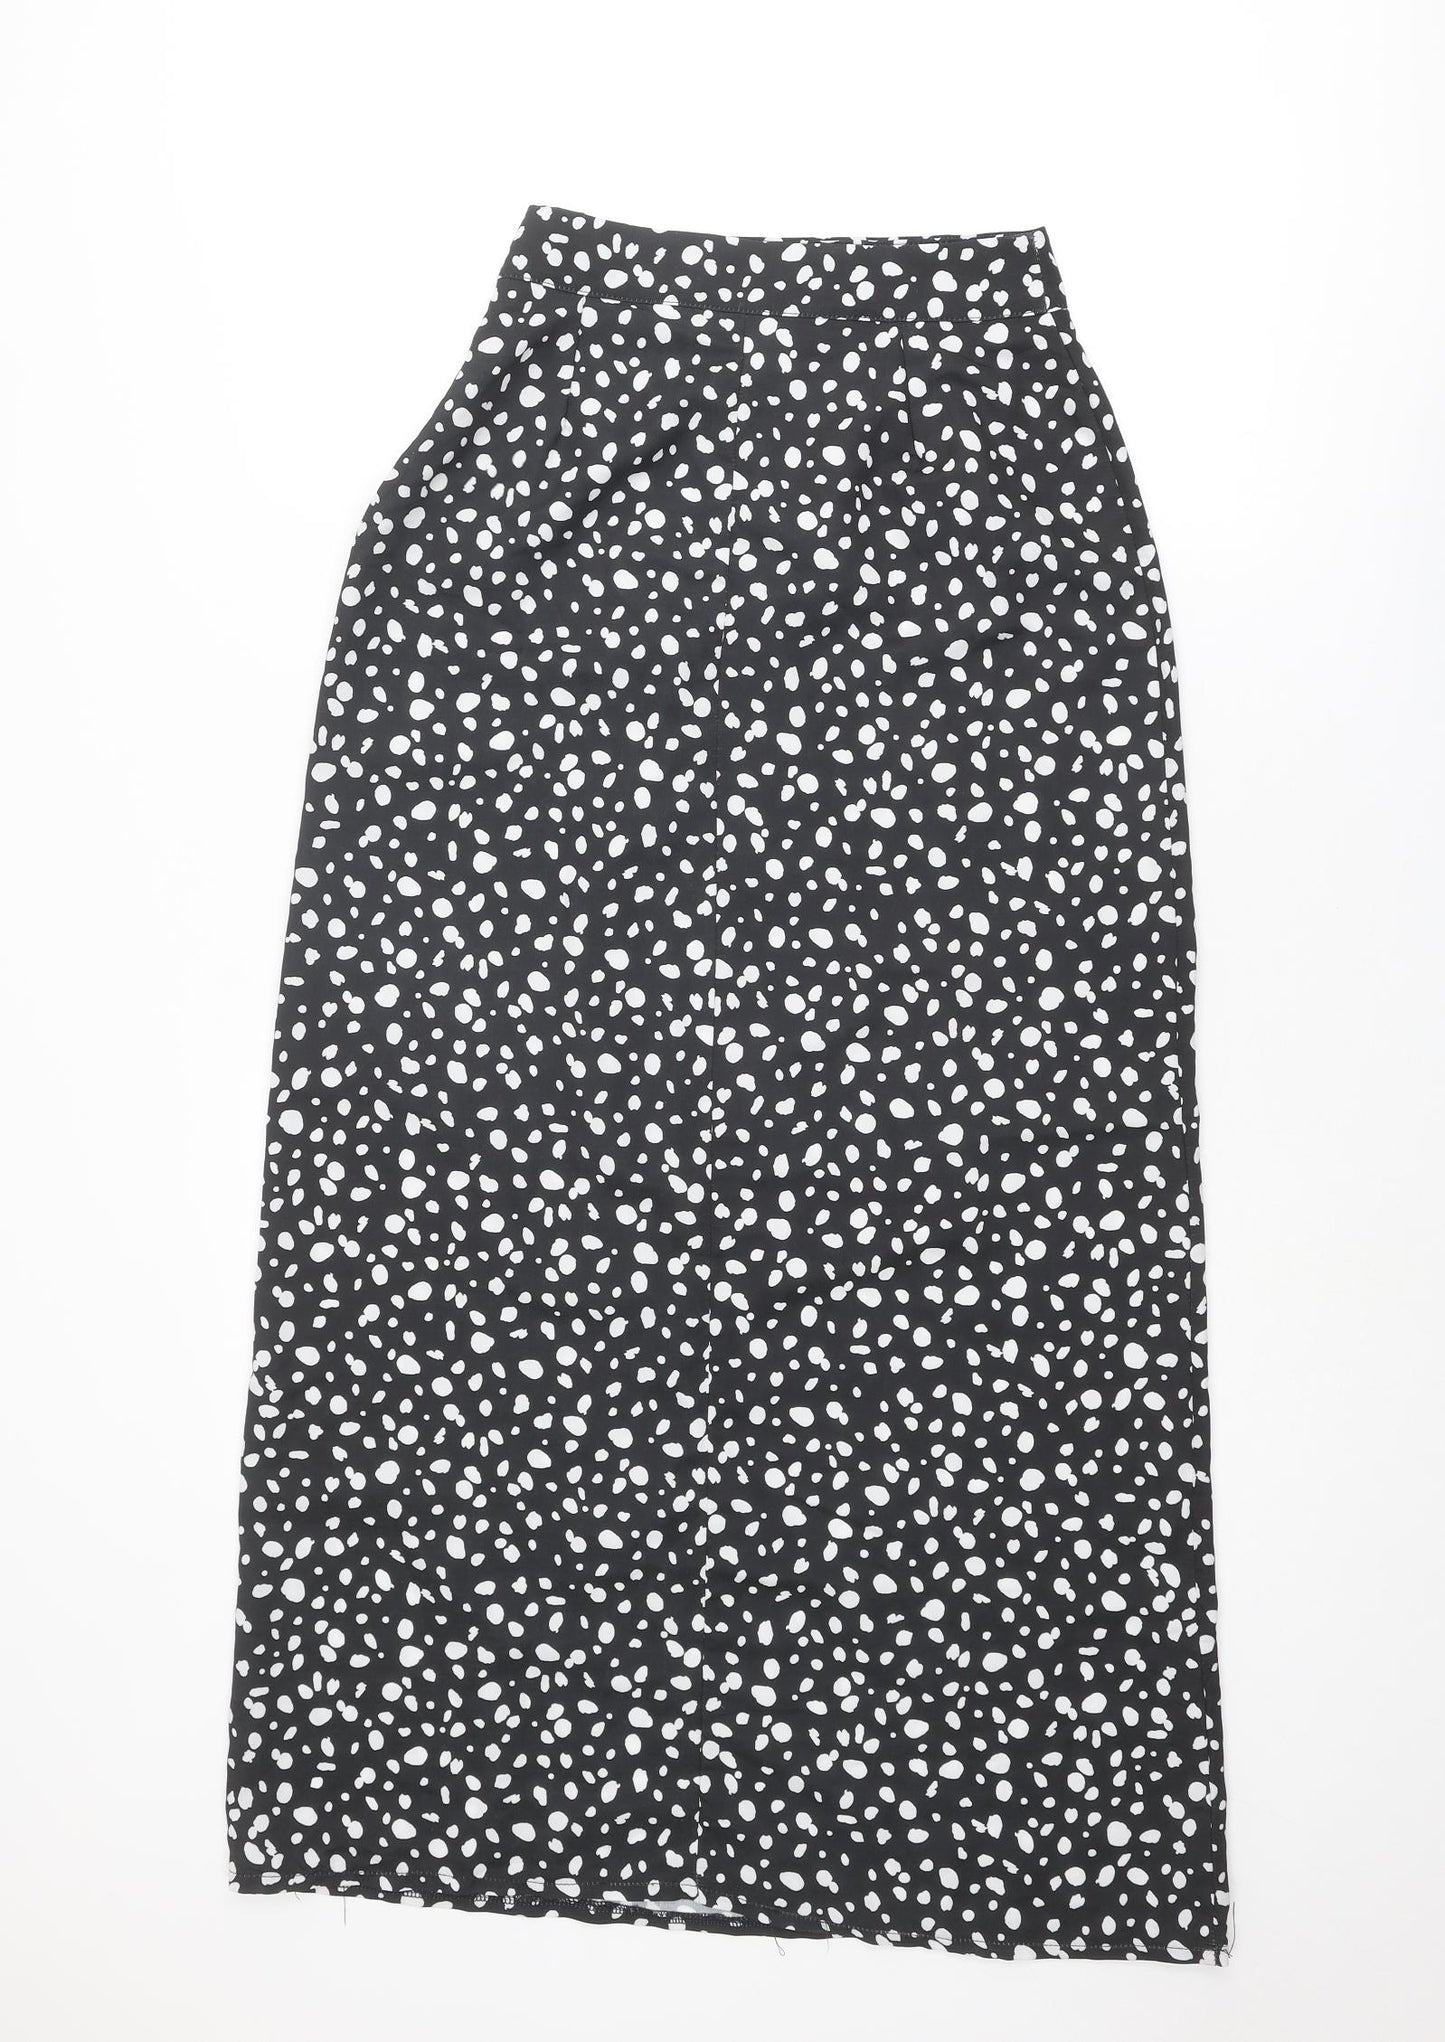 Nasty Gal Womens Black Geometric Polyester A-Line Skirt Size 6 Zip